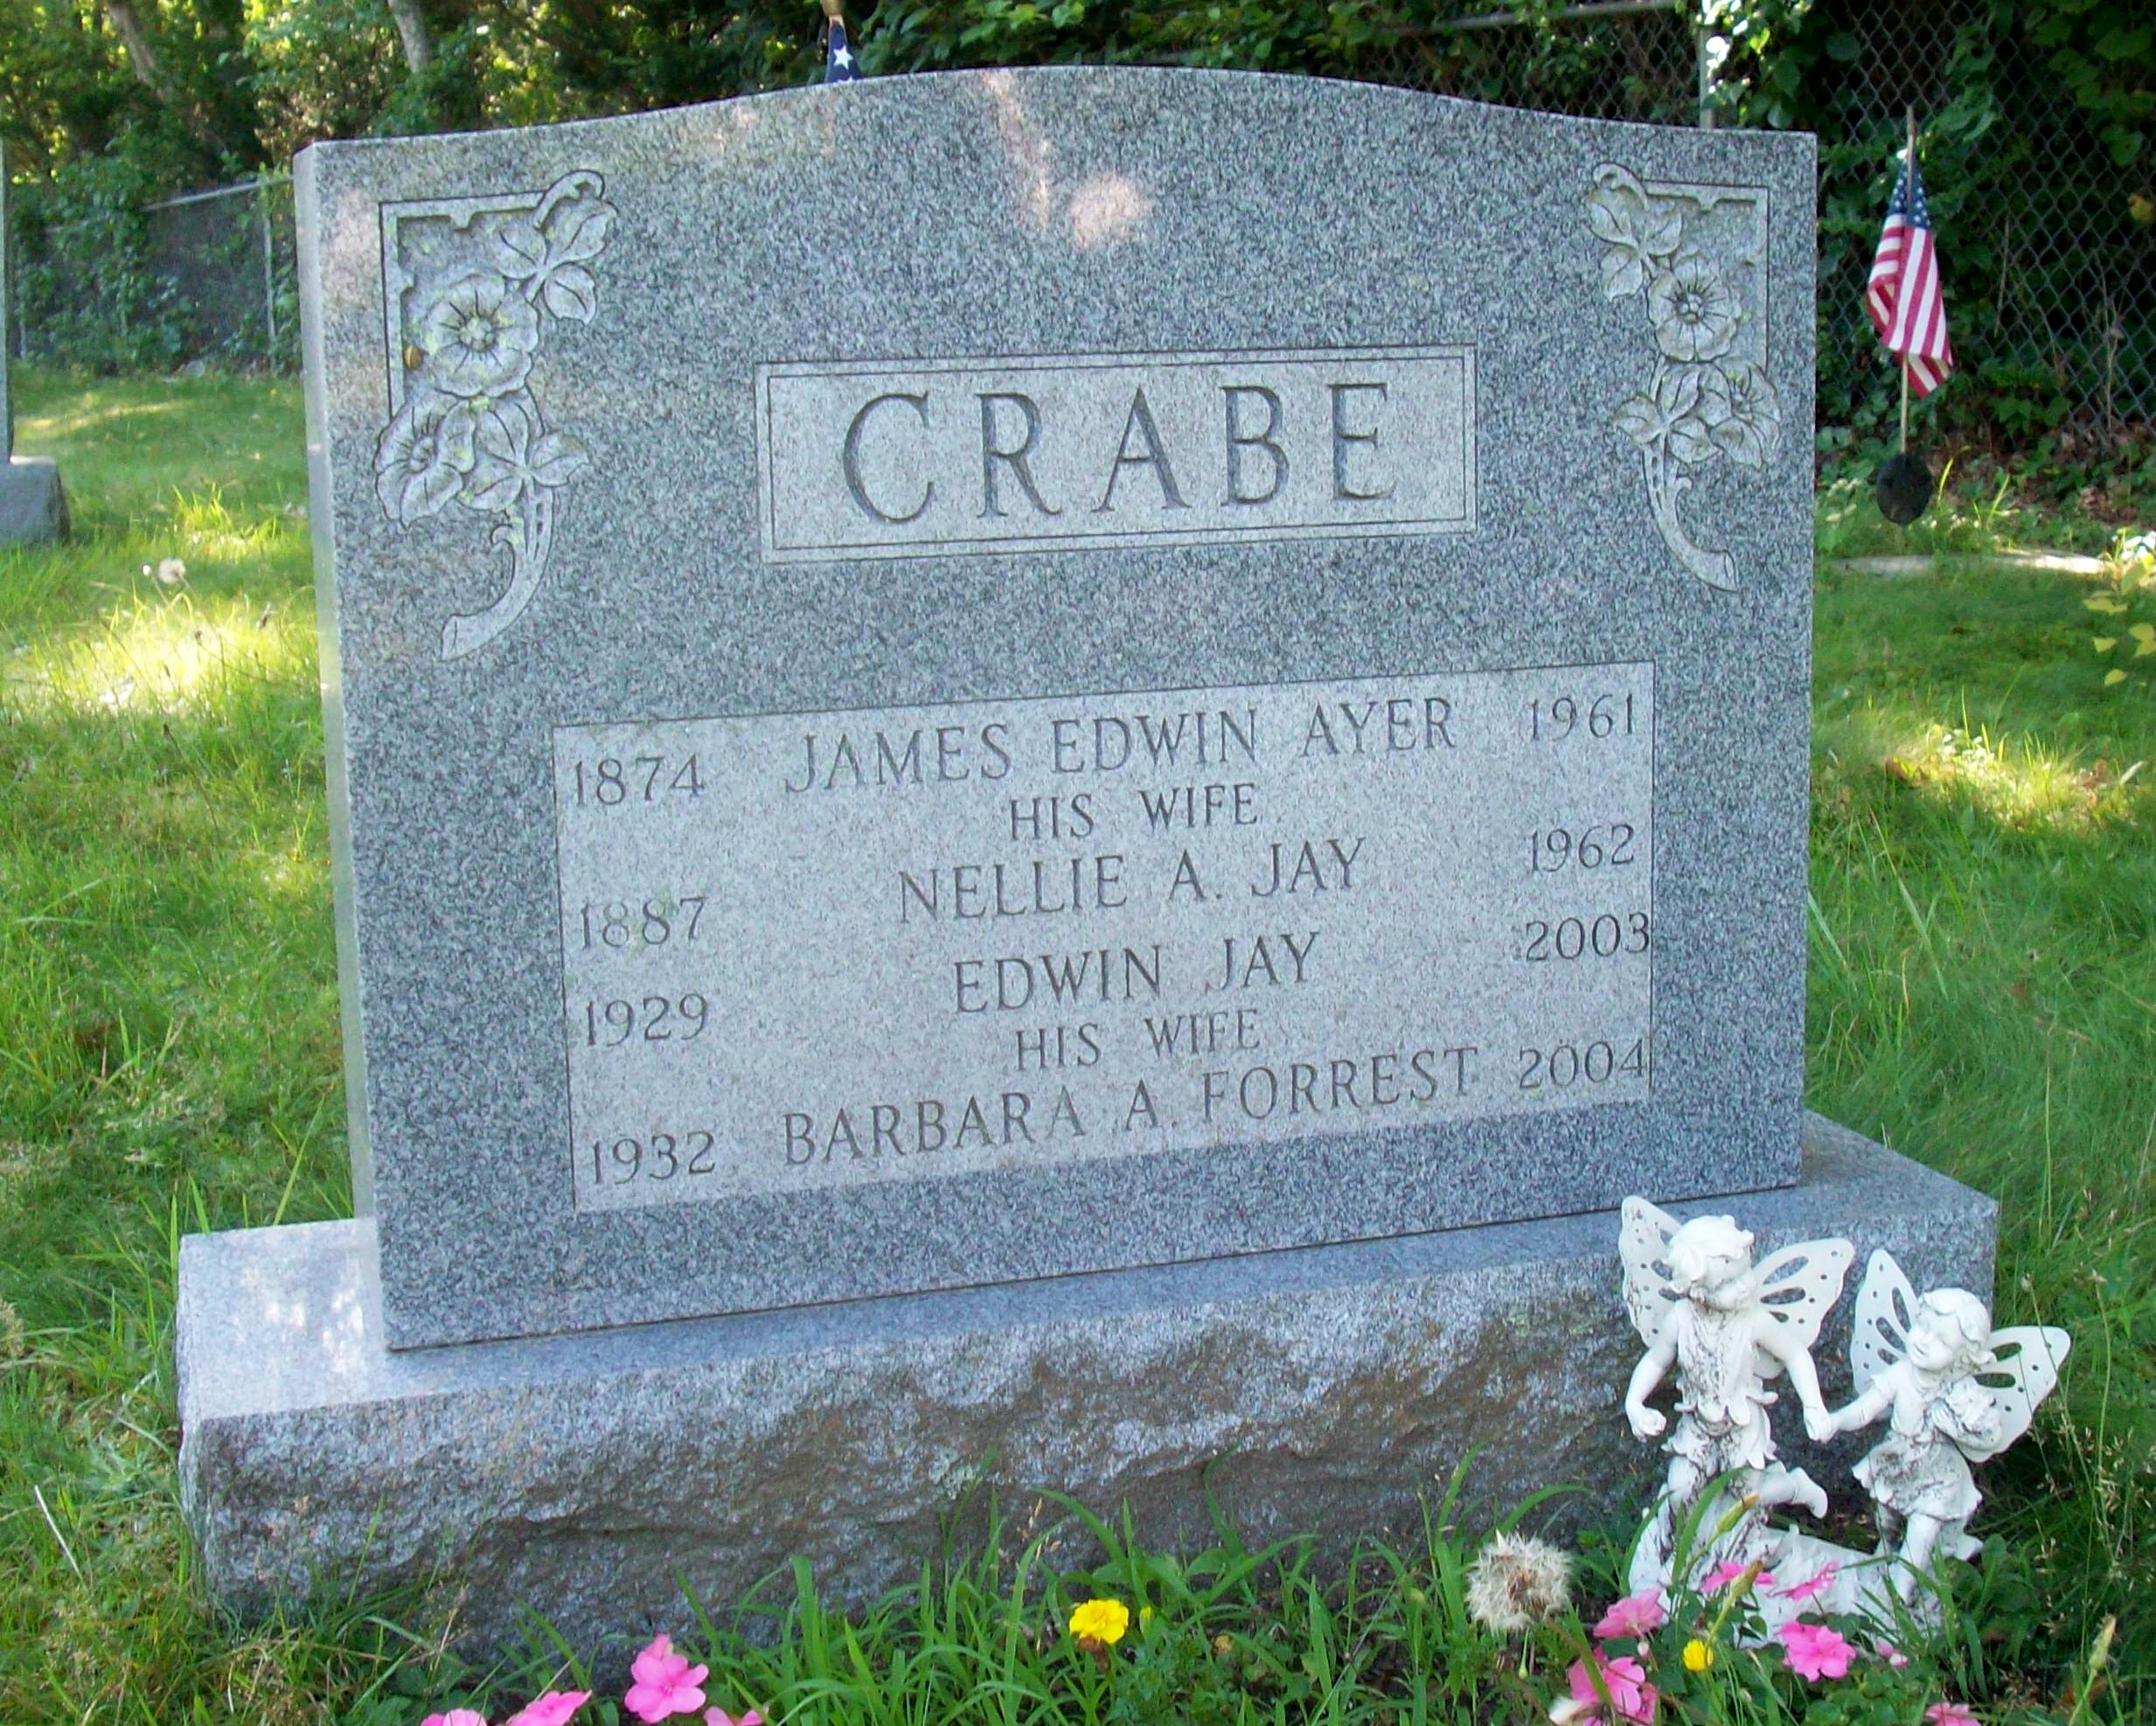 James Edwin Ayer Crabe 1874 – 1961 | PocassetCemetery.org2466 x 1974